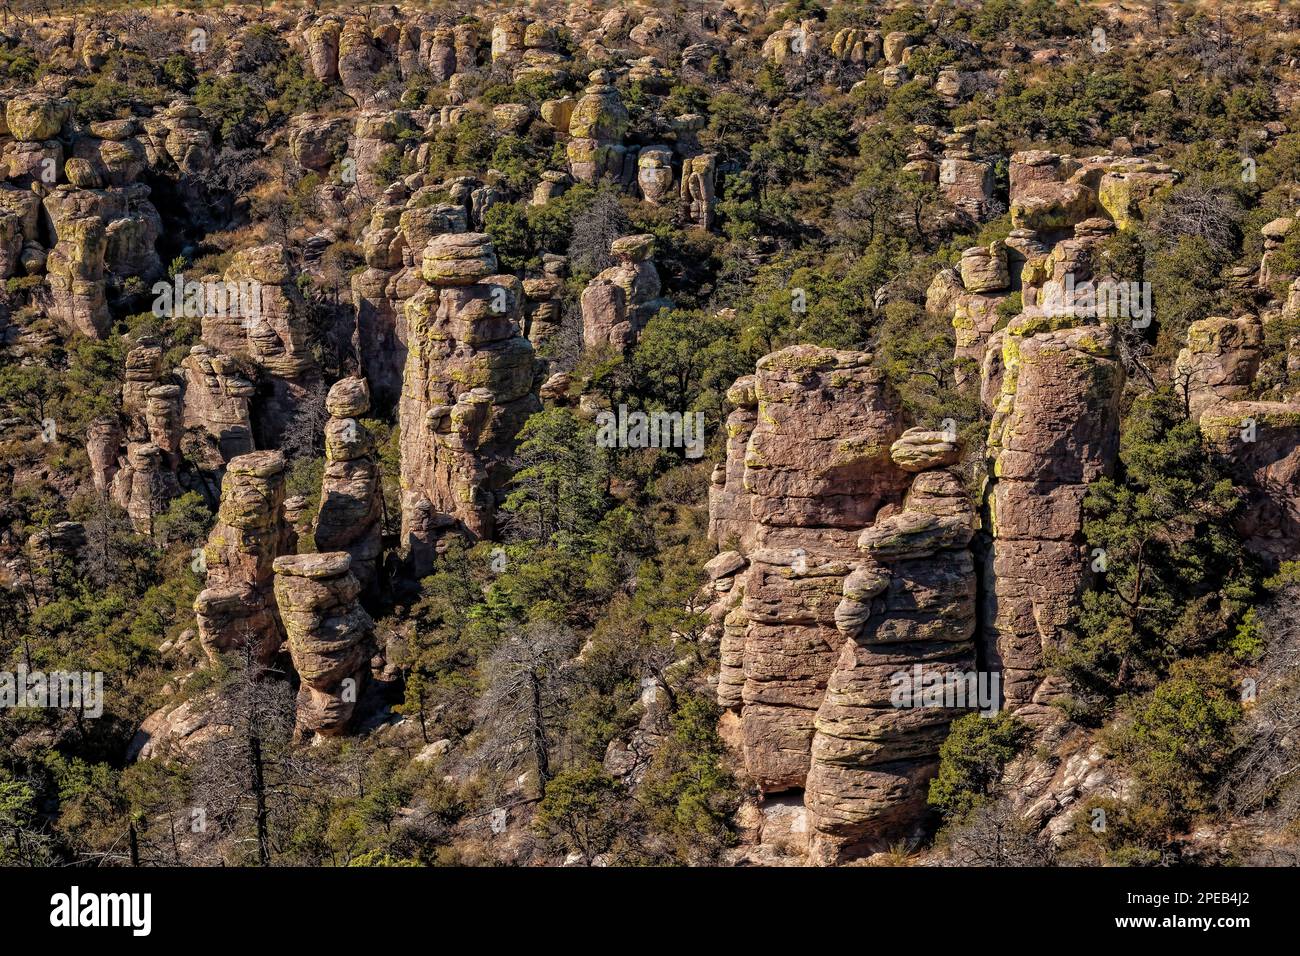 Land of the Standing-Up Rocks, Volcanic rhyolite Deposition, Chiricahua National Monument, Arizona Stock Photo